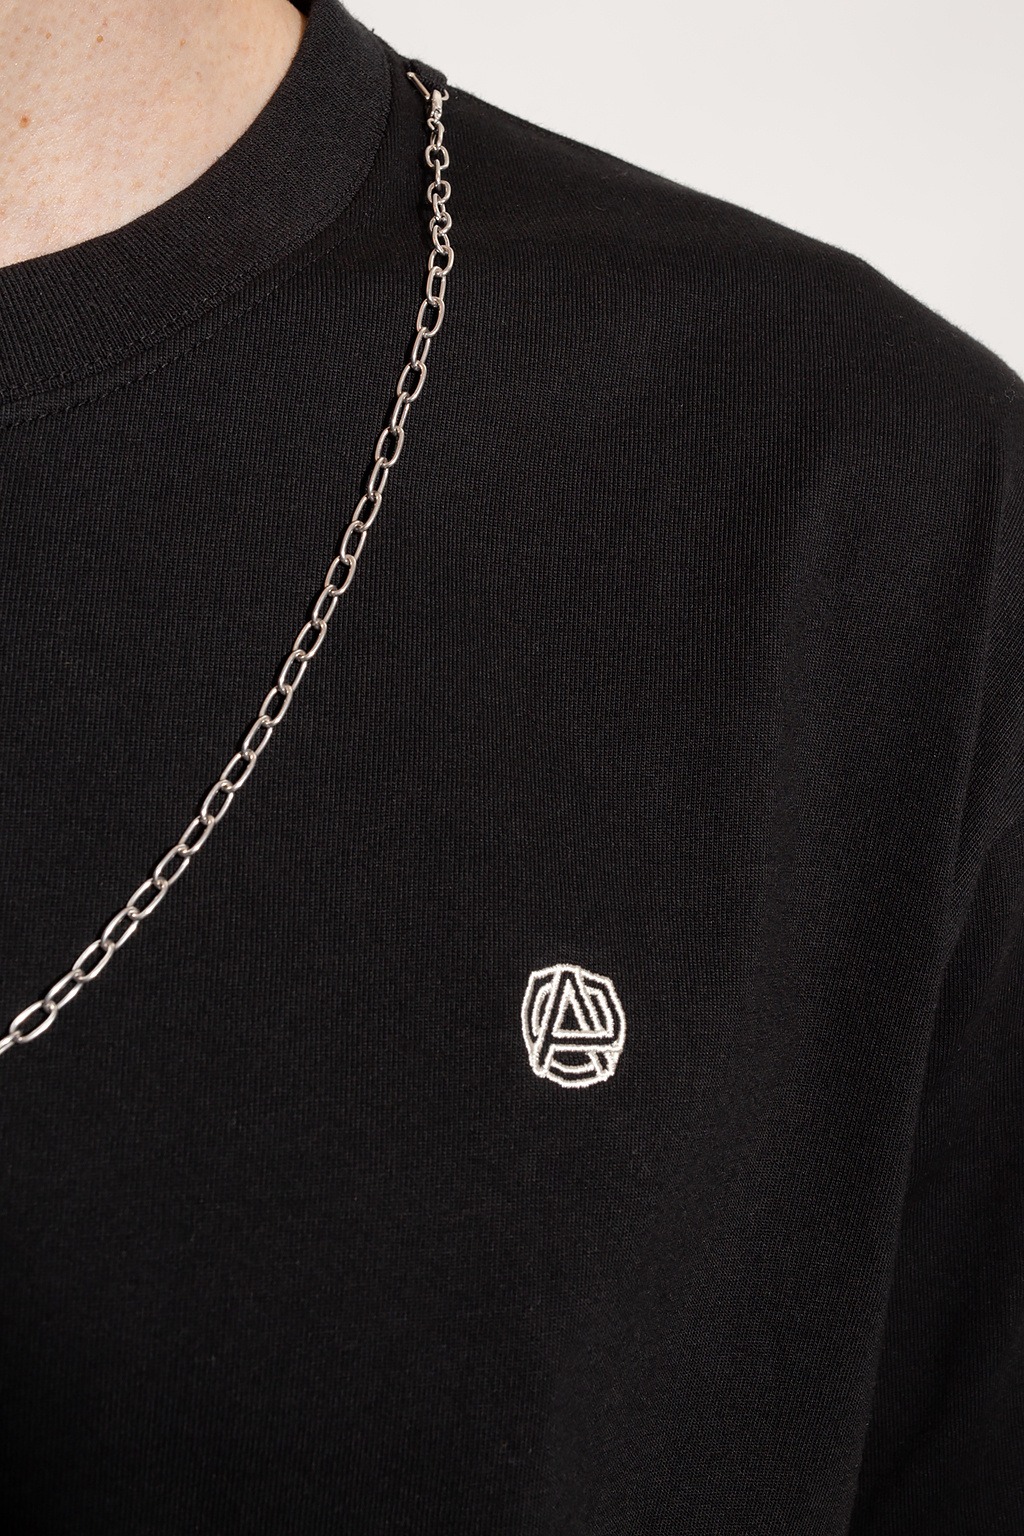 Ambush kith for the notorious b i g hypnotize classic logo hoodie